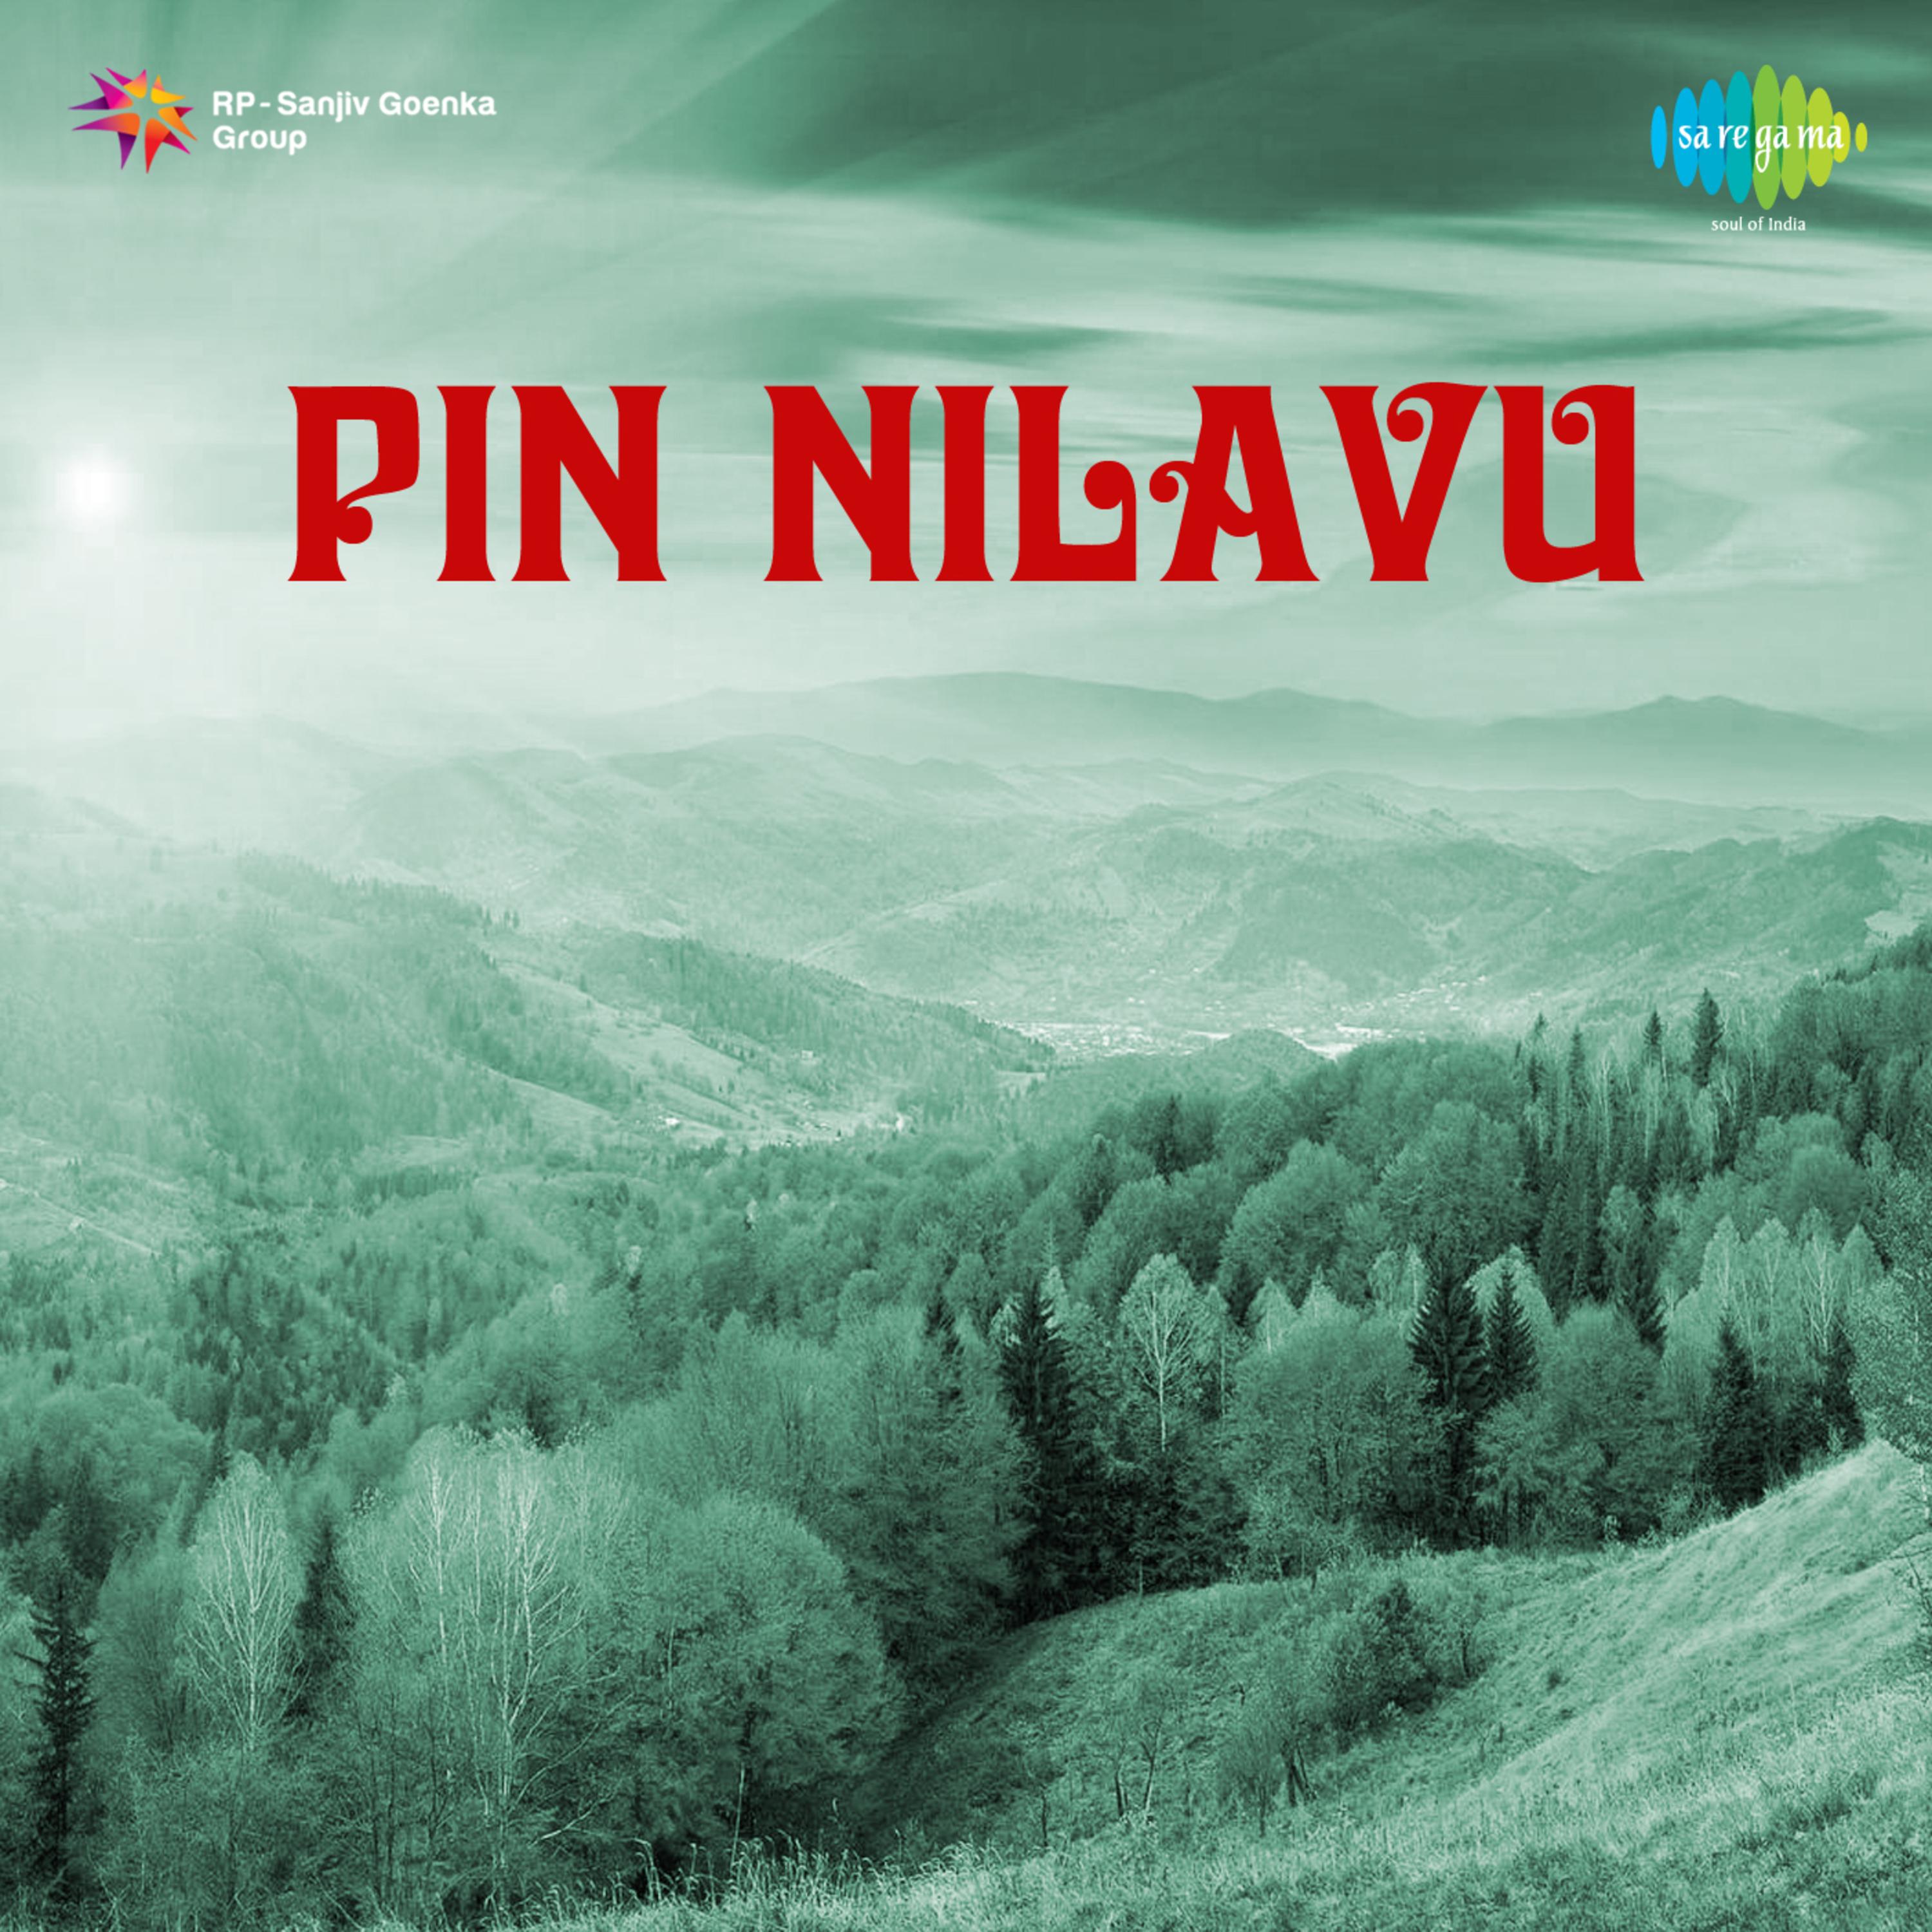 Pinnilavu (Original Motion Picture Soundtrack)